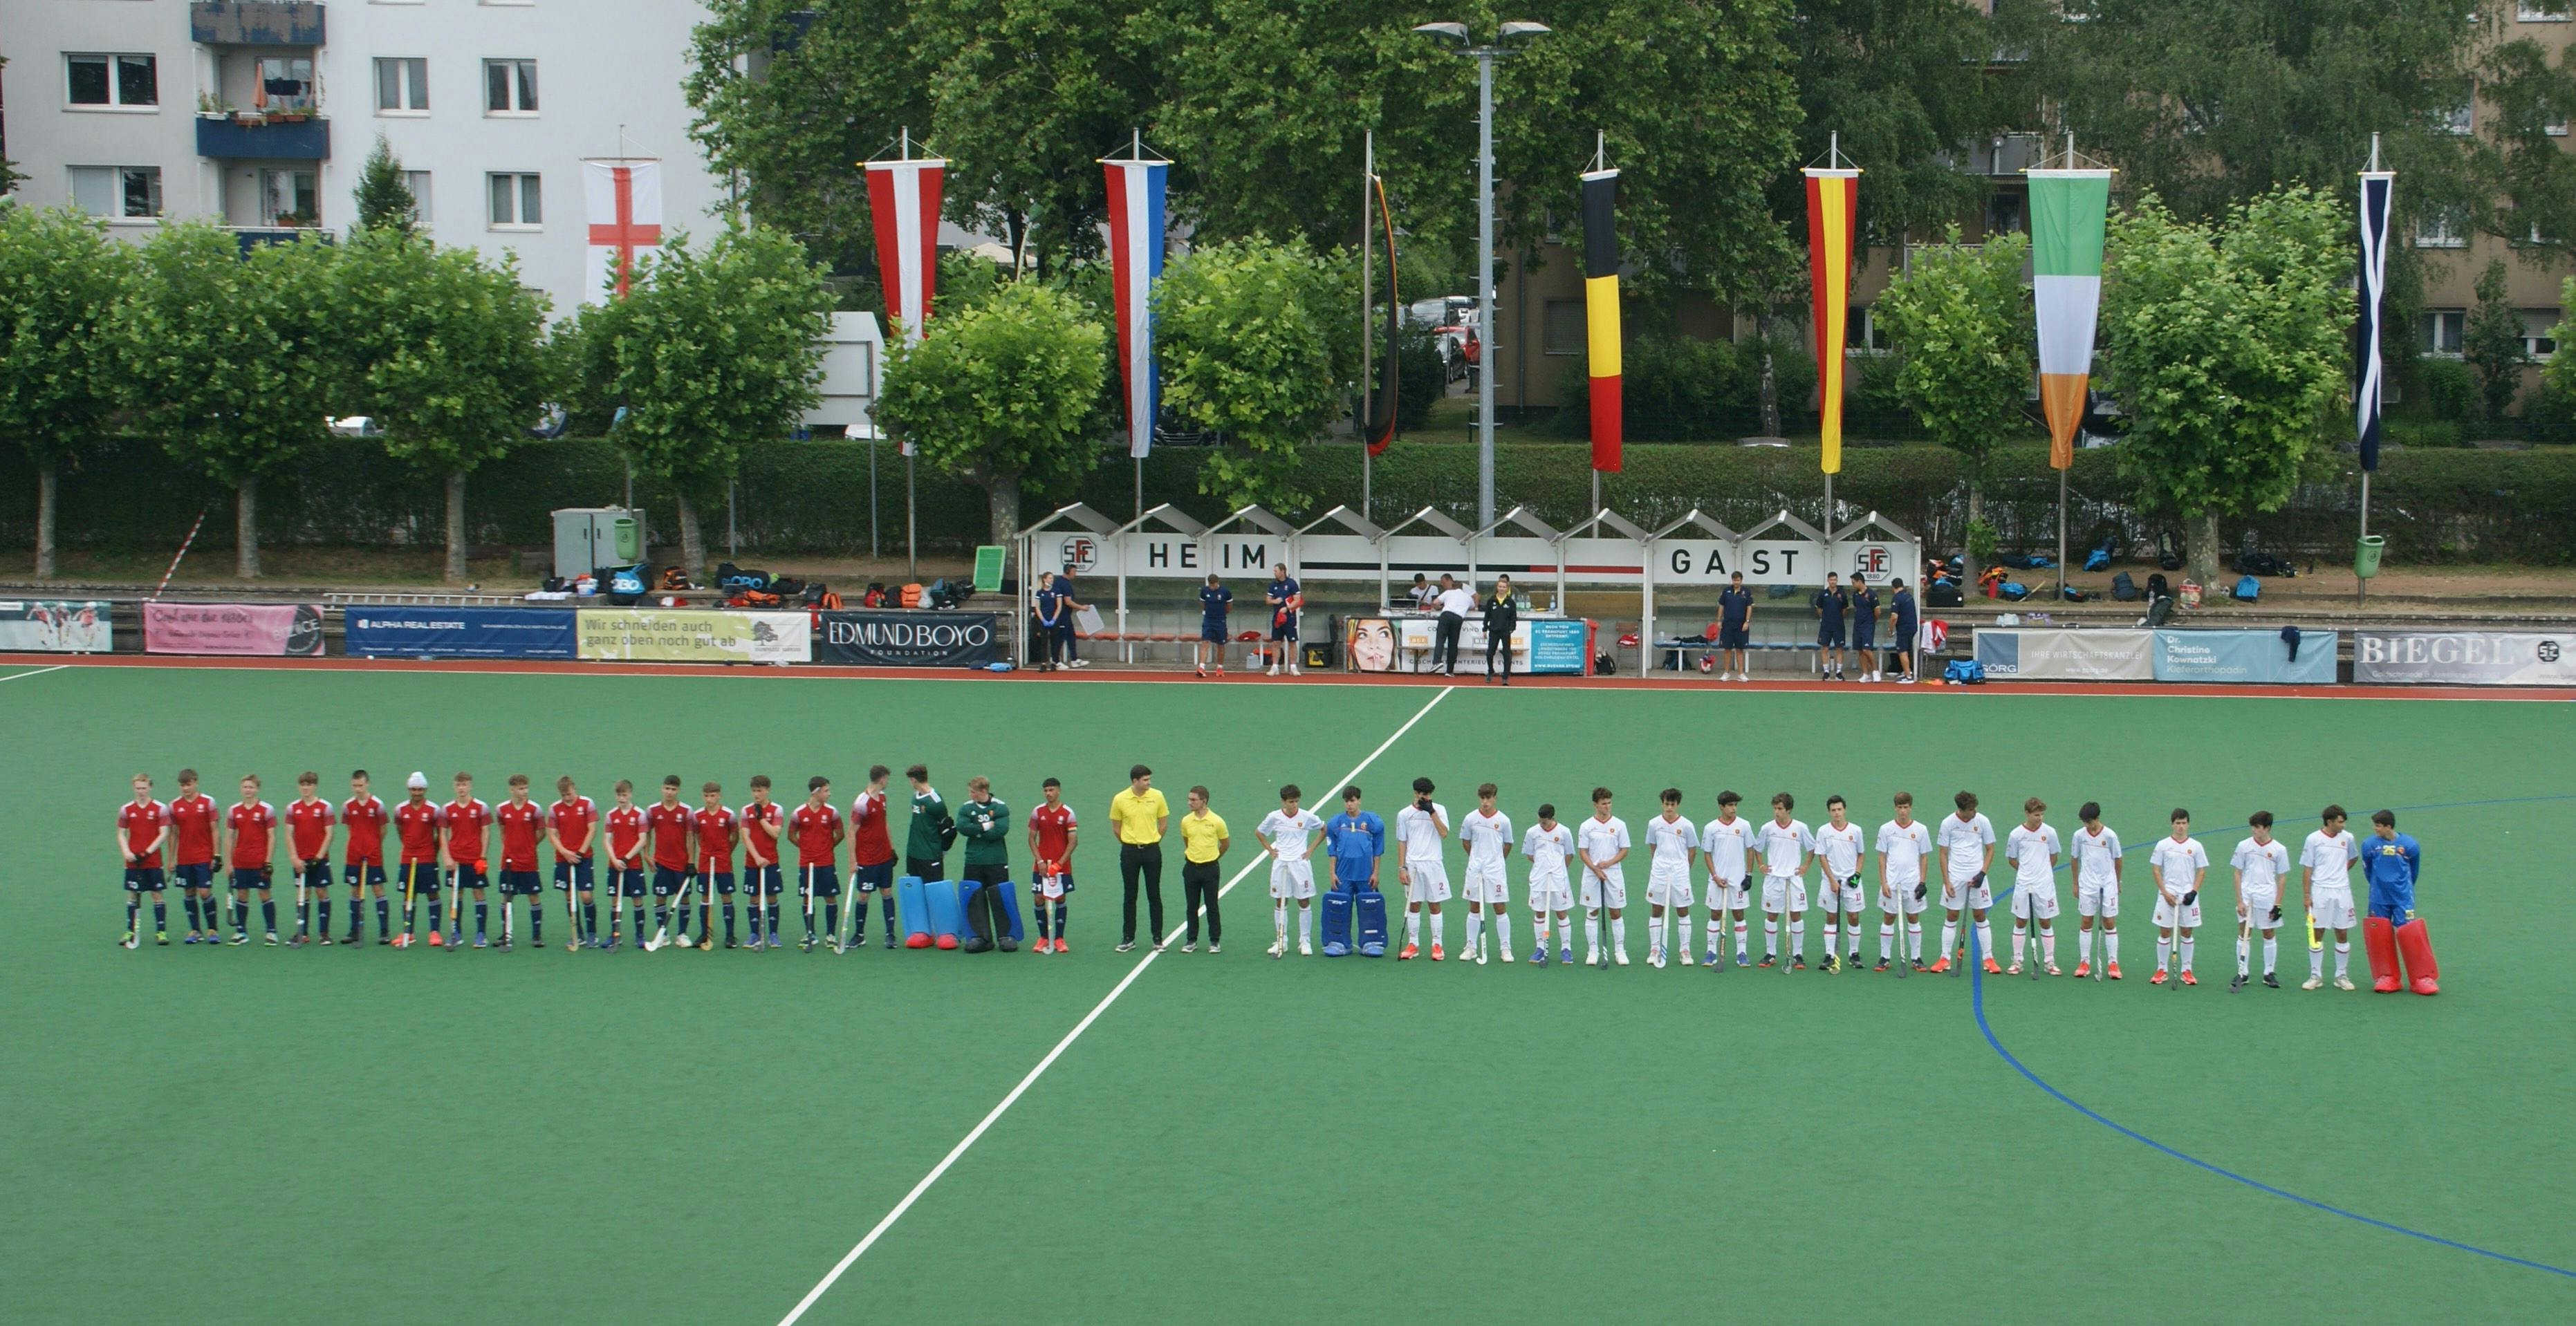 U16 National Hockey Teams at the 8-nation tournament in Frankfurt